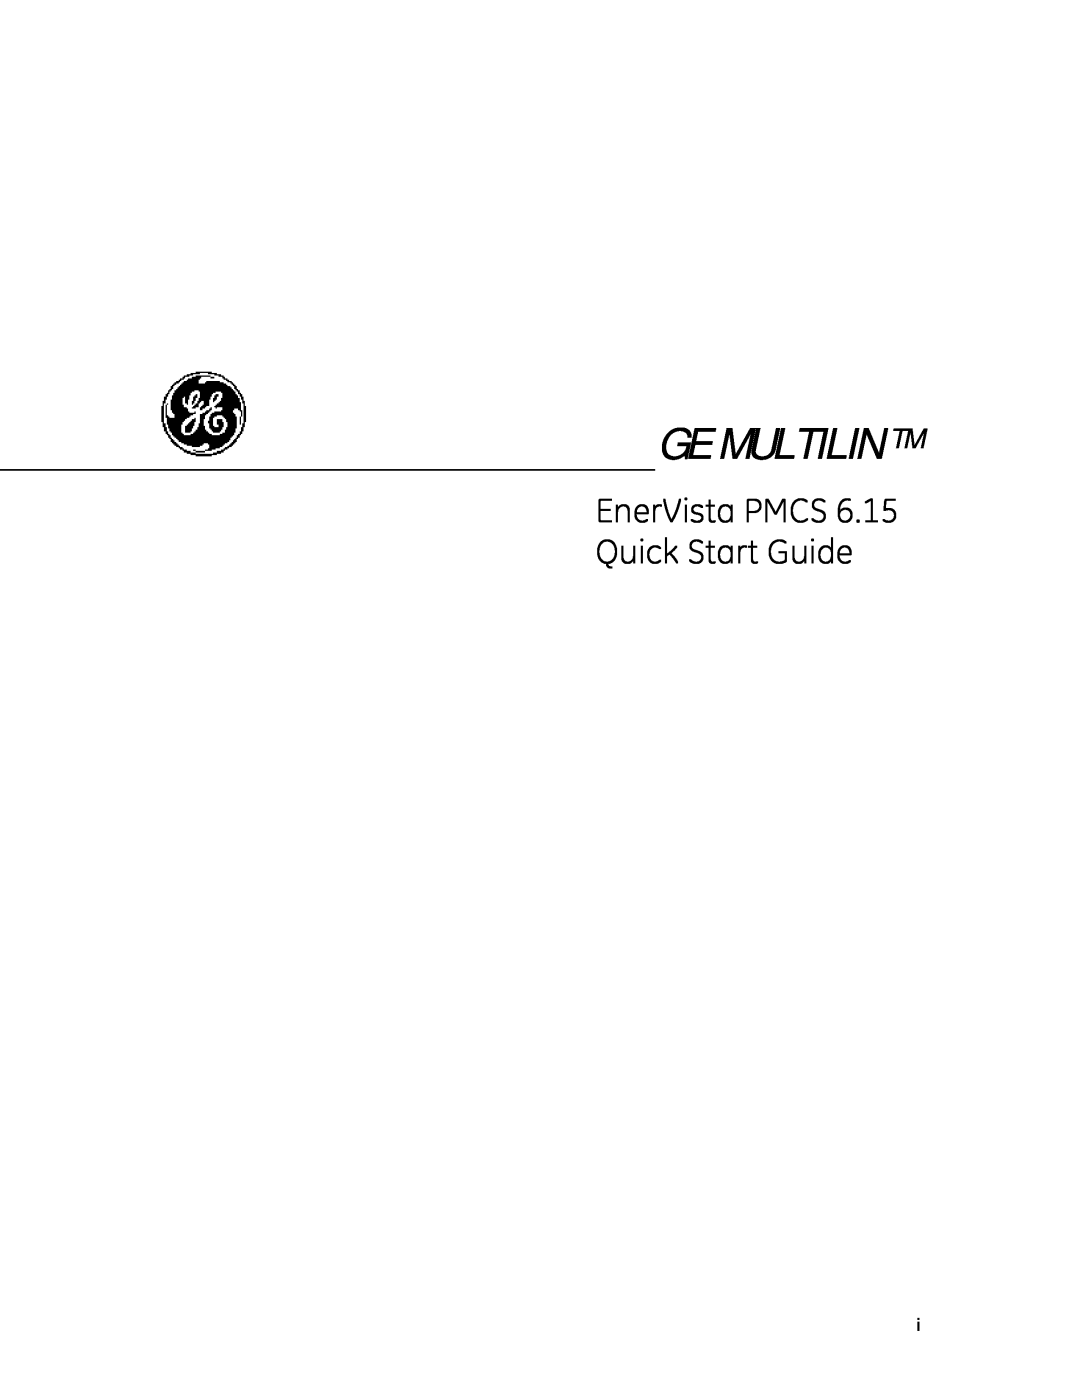 GE quick start Ge Multilin Tm, EnerVista PMCS 6.15 Quick Start Guide 